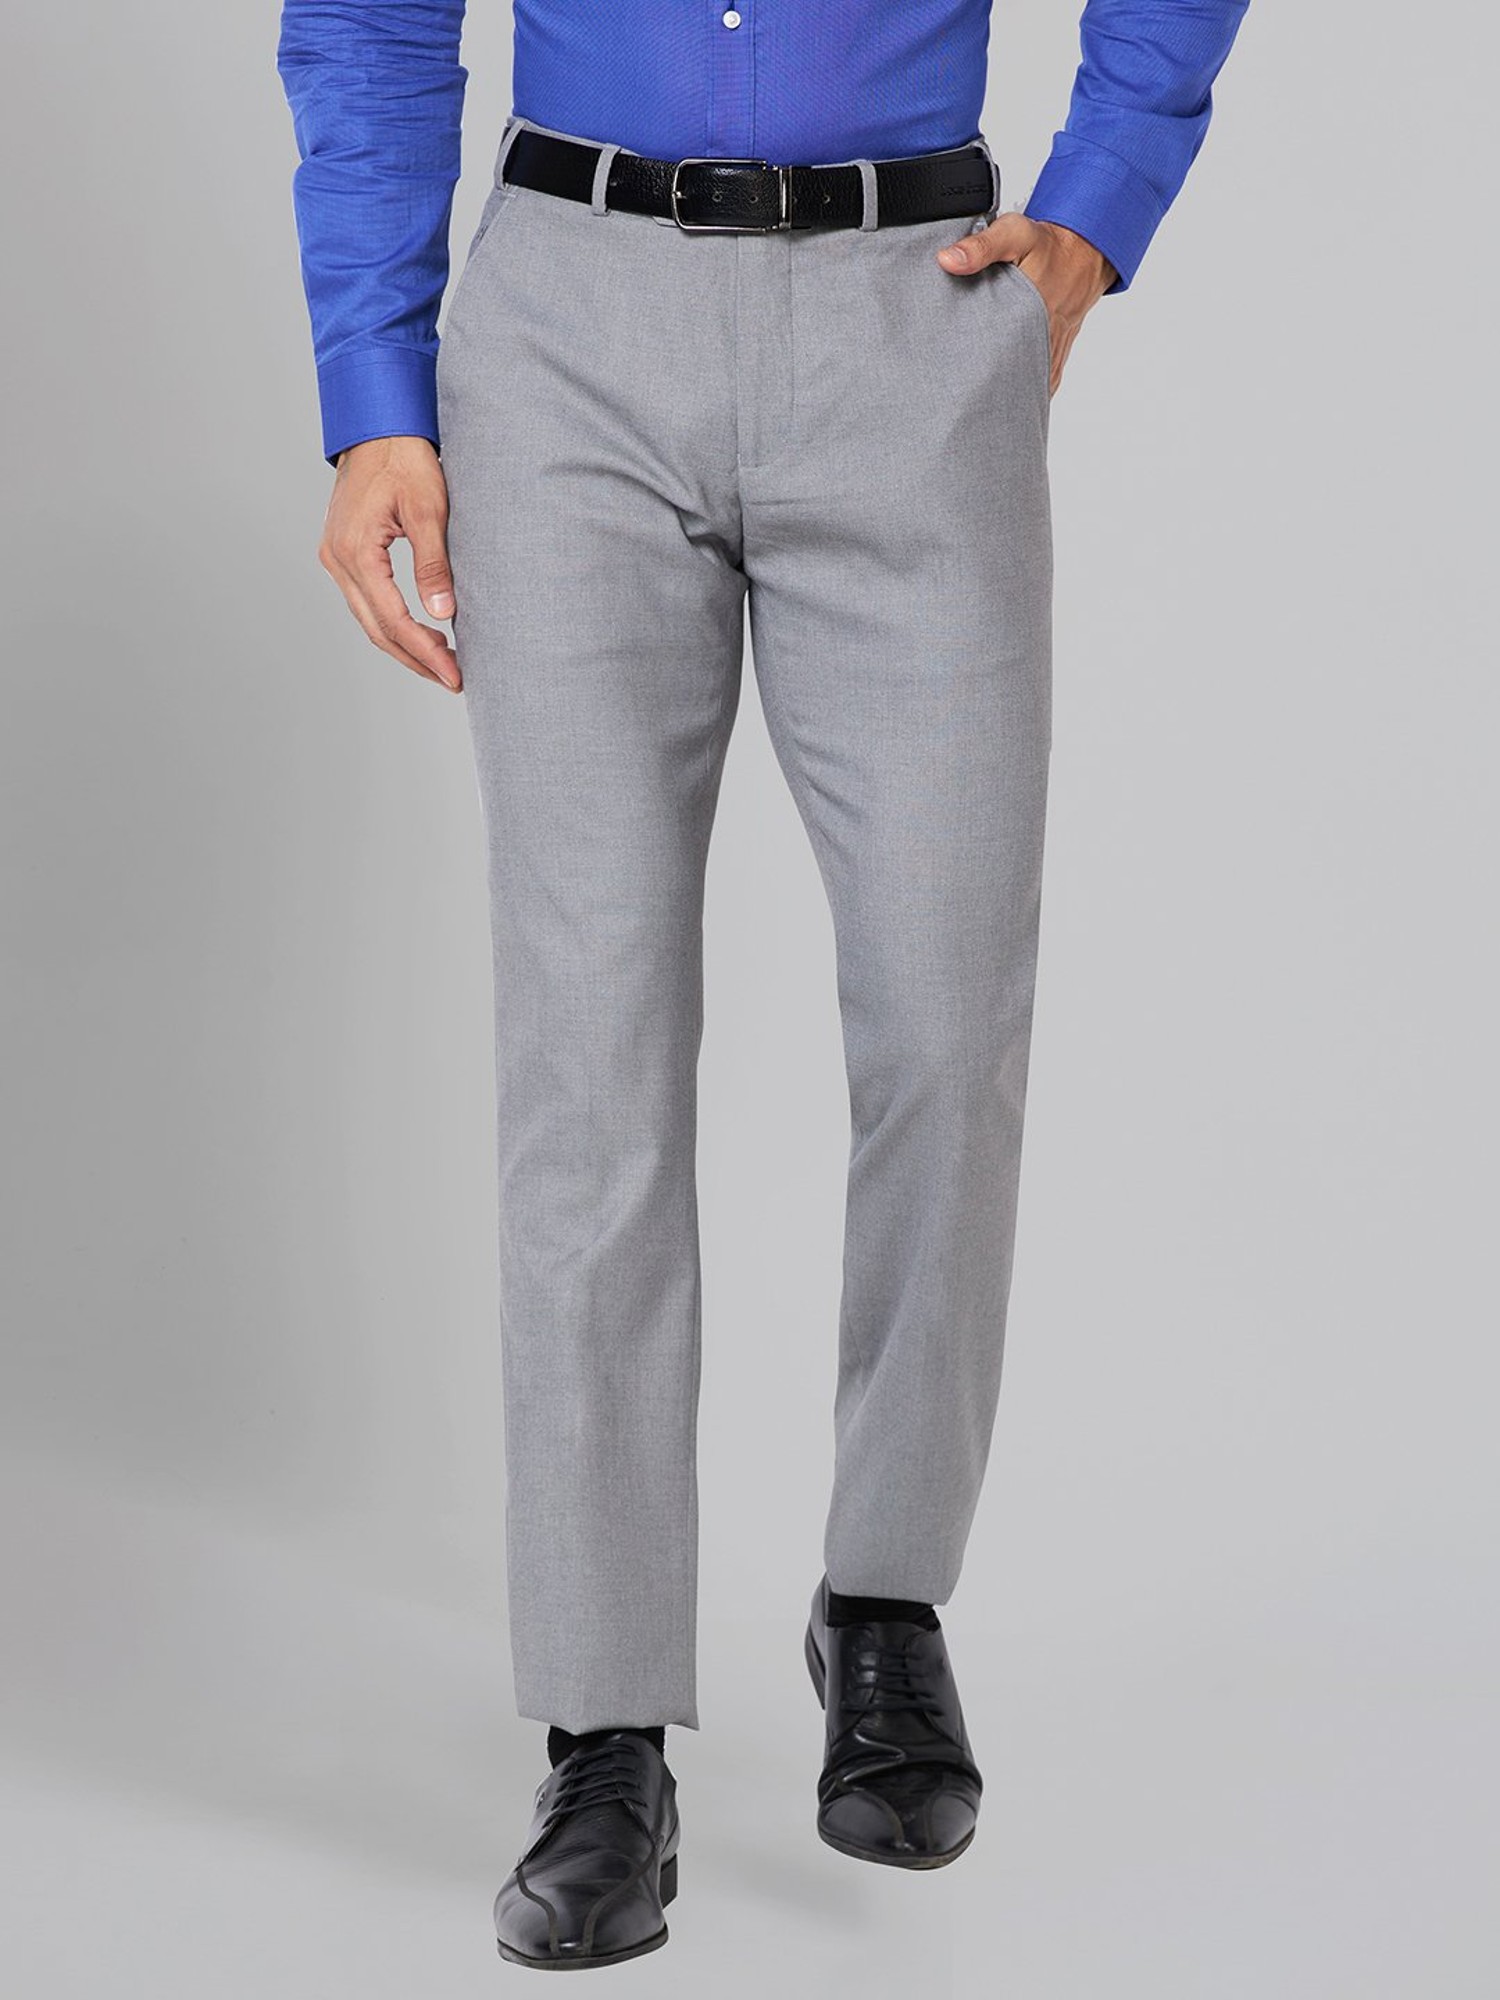 Buy Raymond Men's Classic Fit Formal Trousers (RMTA04598-B8_Dark Blue_76)  at Amazon.in